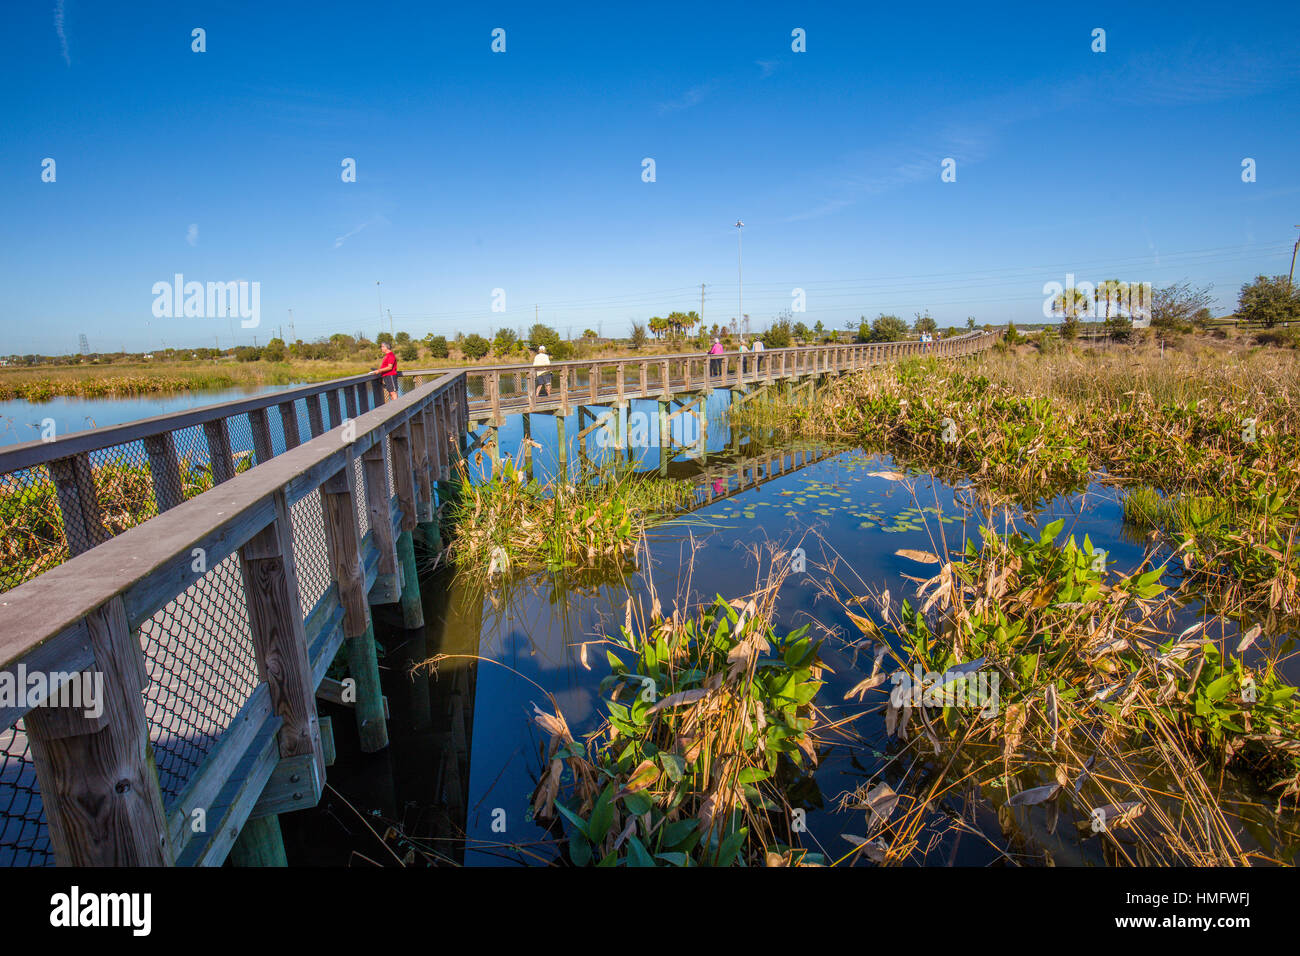 Promenade in Sellerie Erholung und Natur Bereich Felder in Sarasota Couny in Sarasota Florida Stockfoto